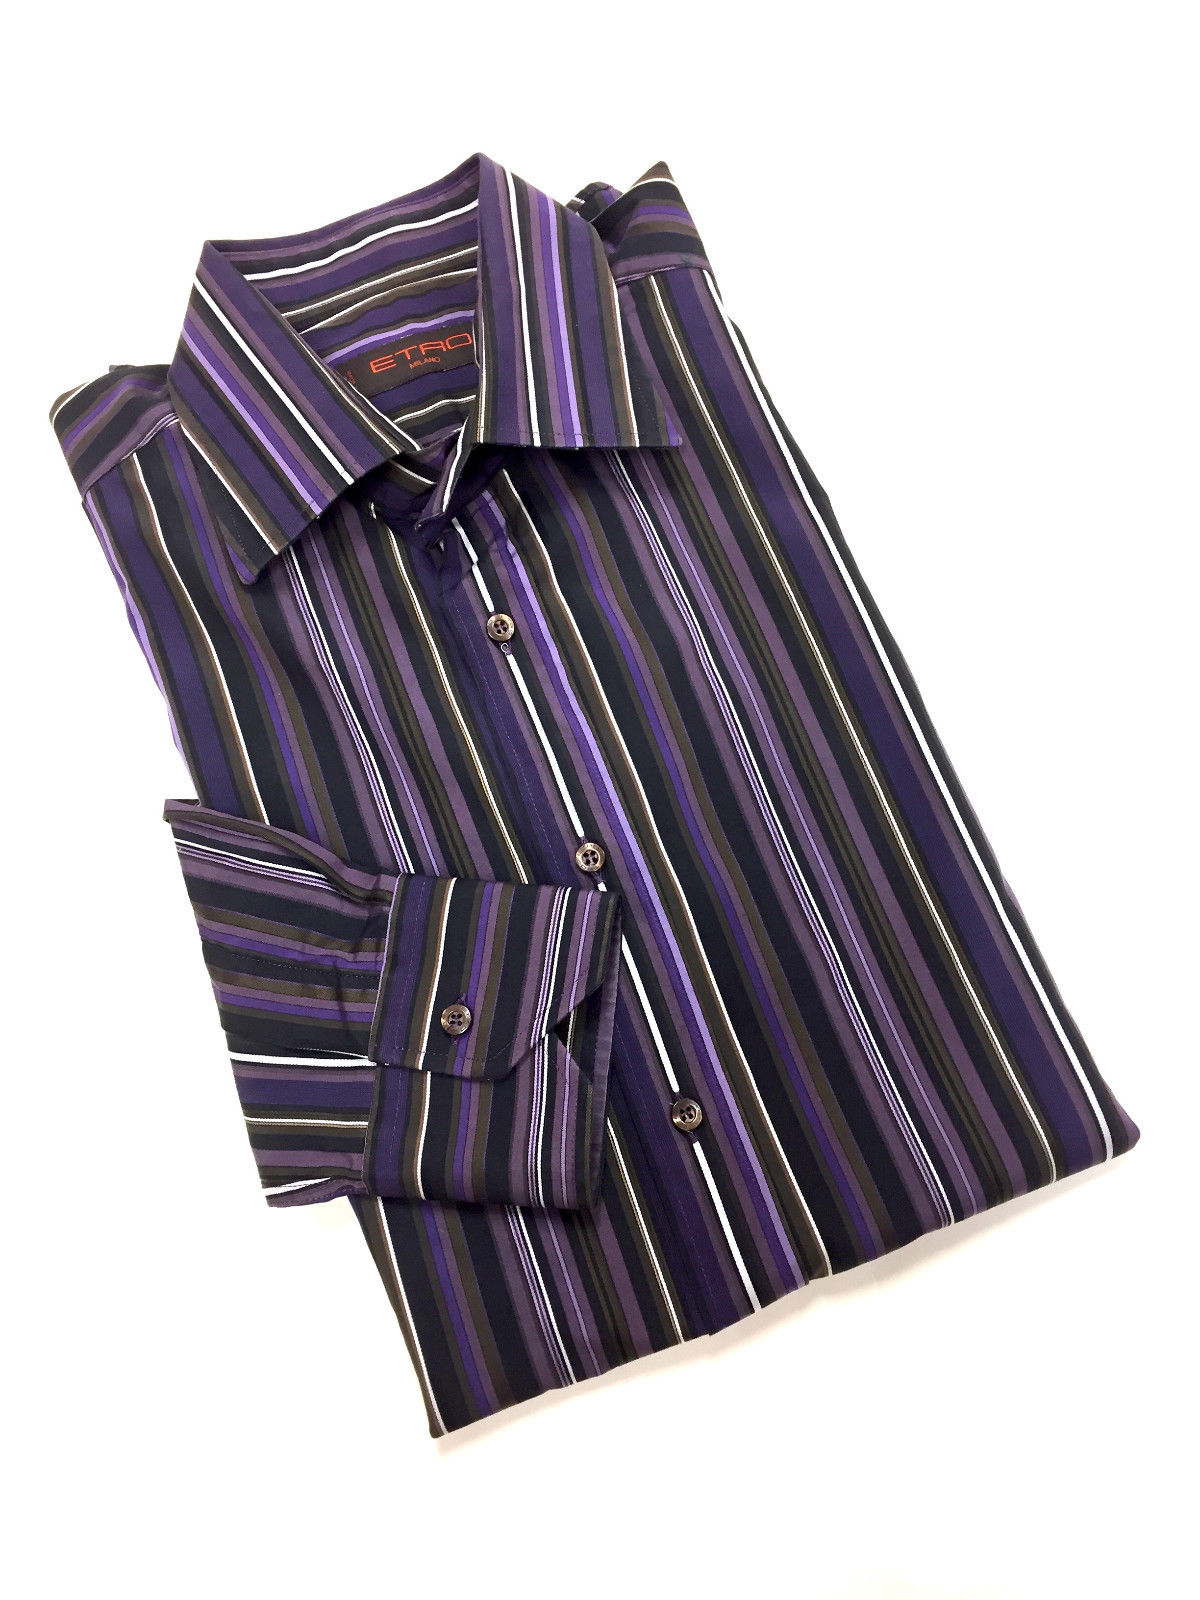 purple striped dress shirt